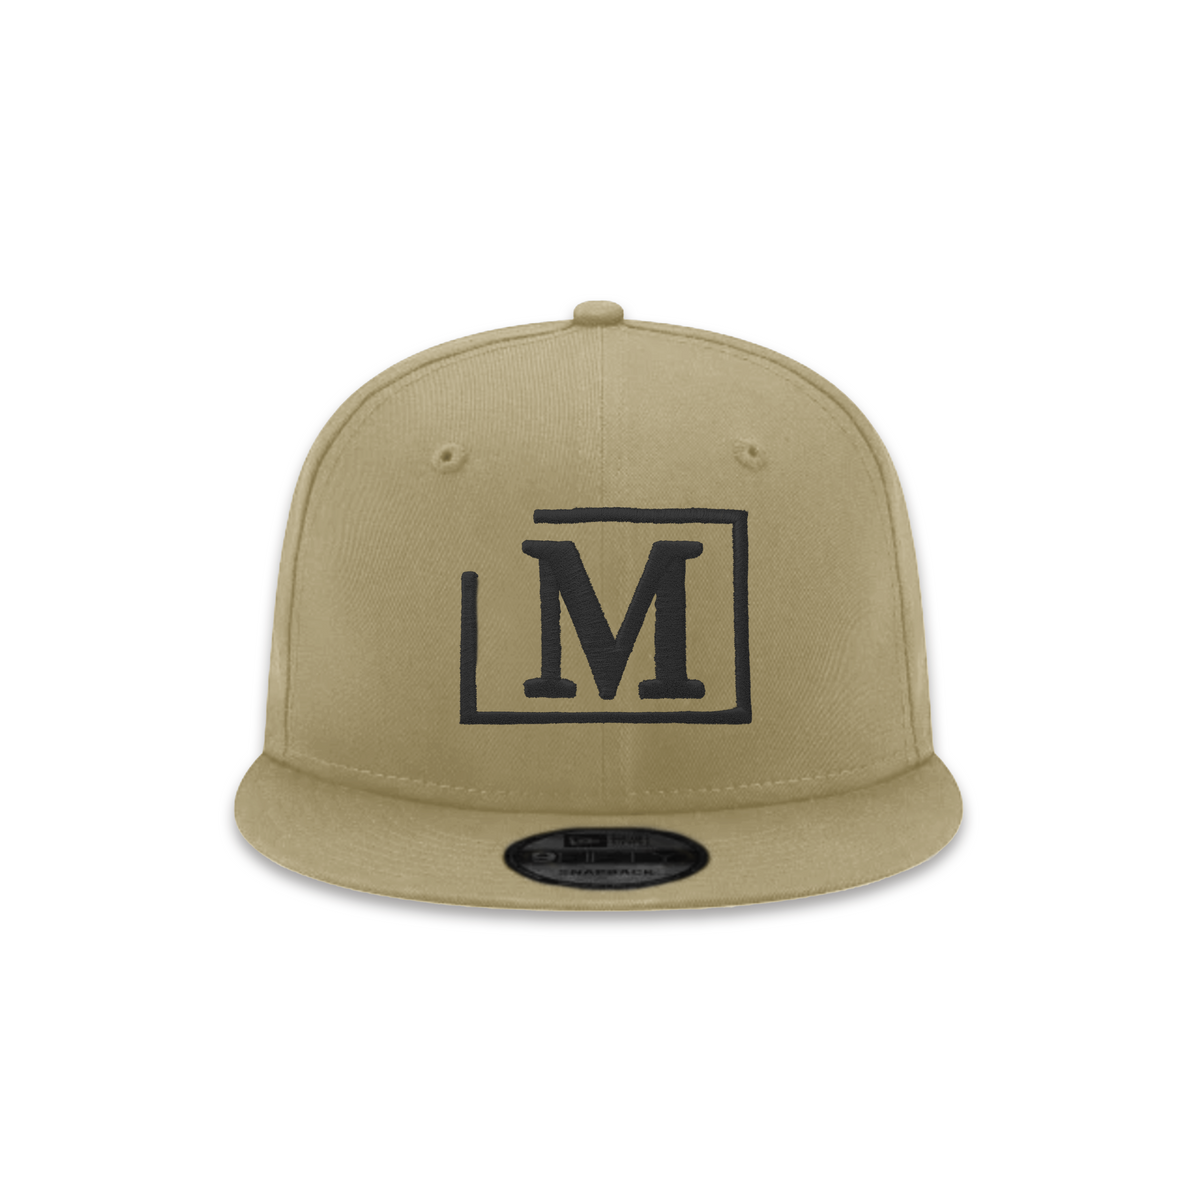 MDB Brand x New Era 9Fifty Snapback Embroidered Baseball Cap - Neutral